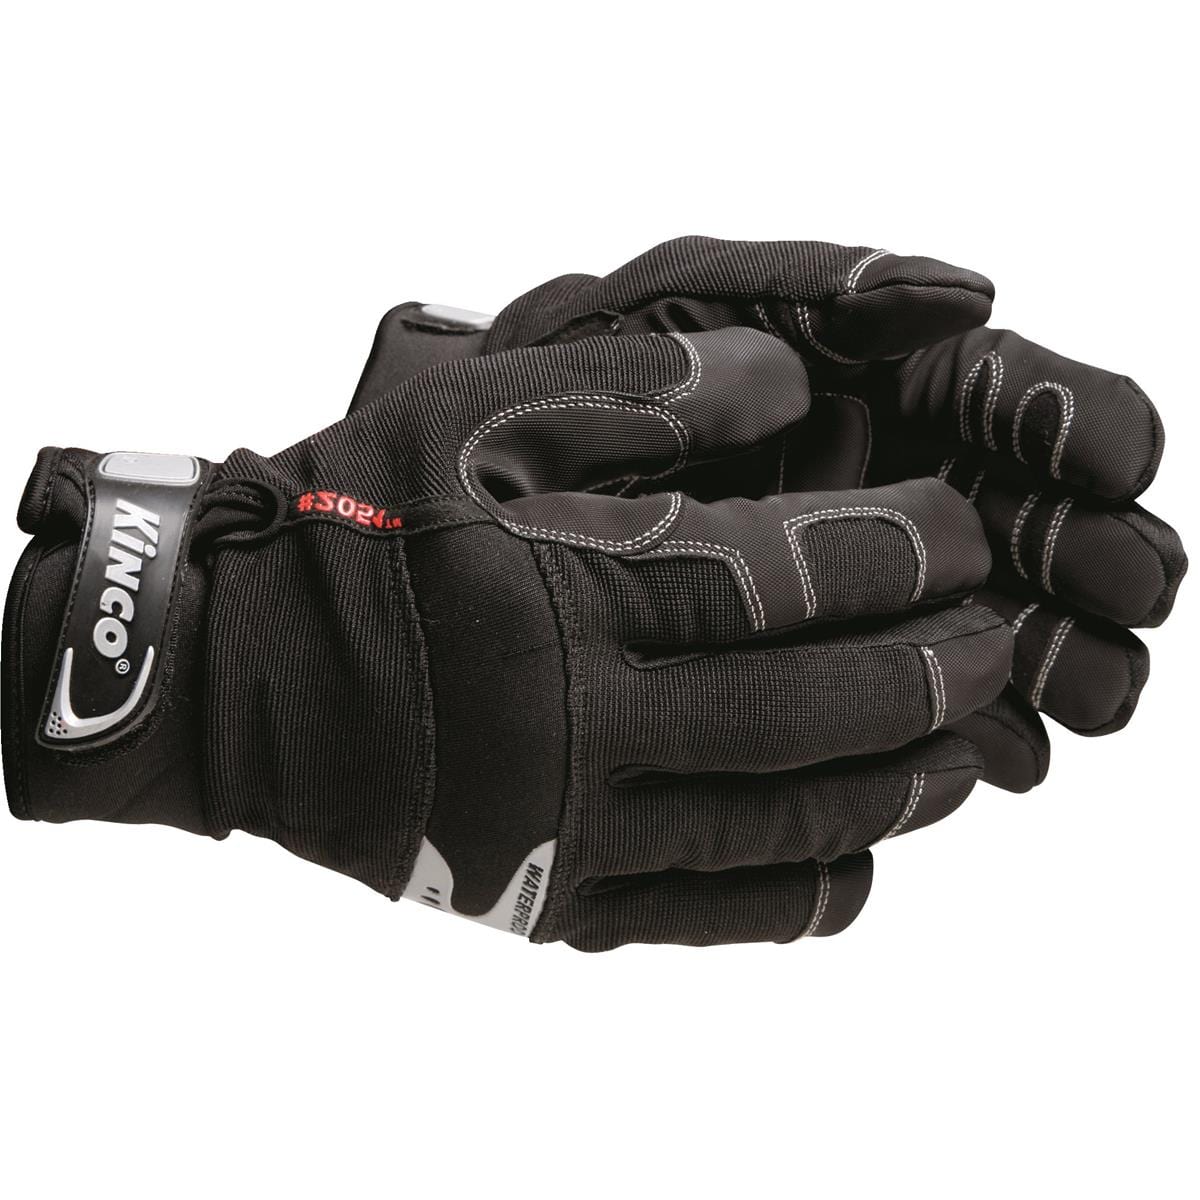 Waterproof Insulated Utility Glove